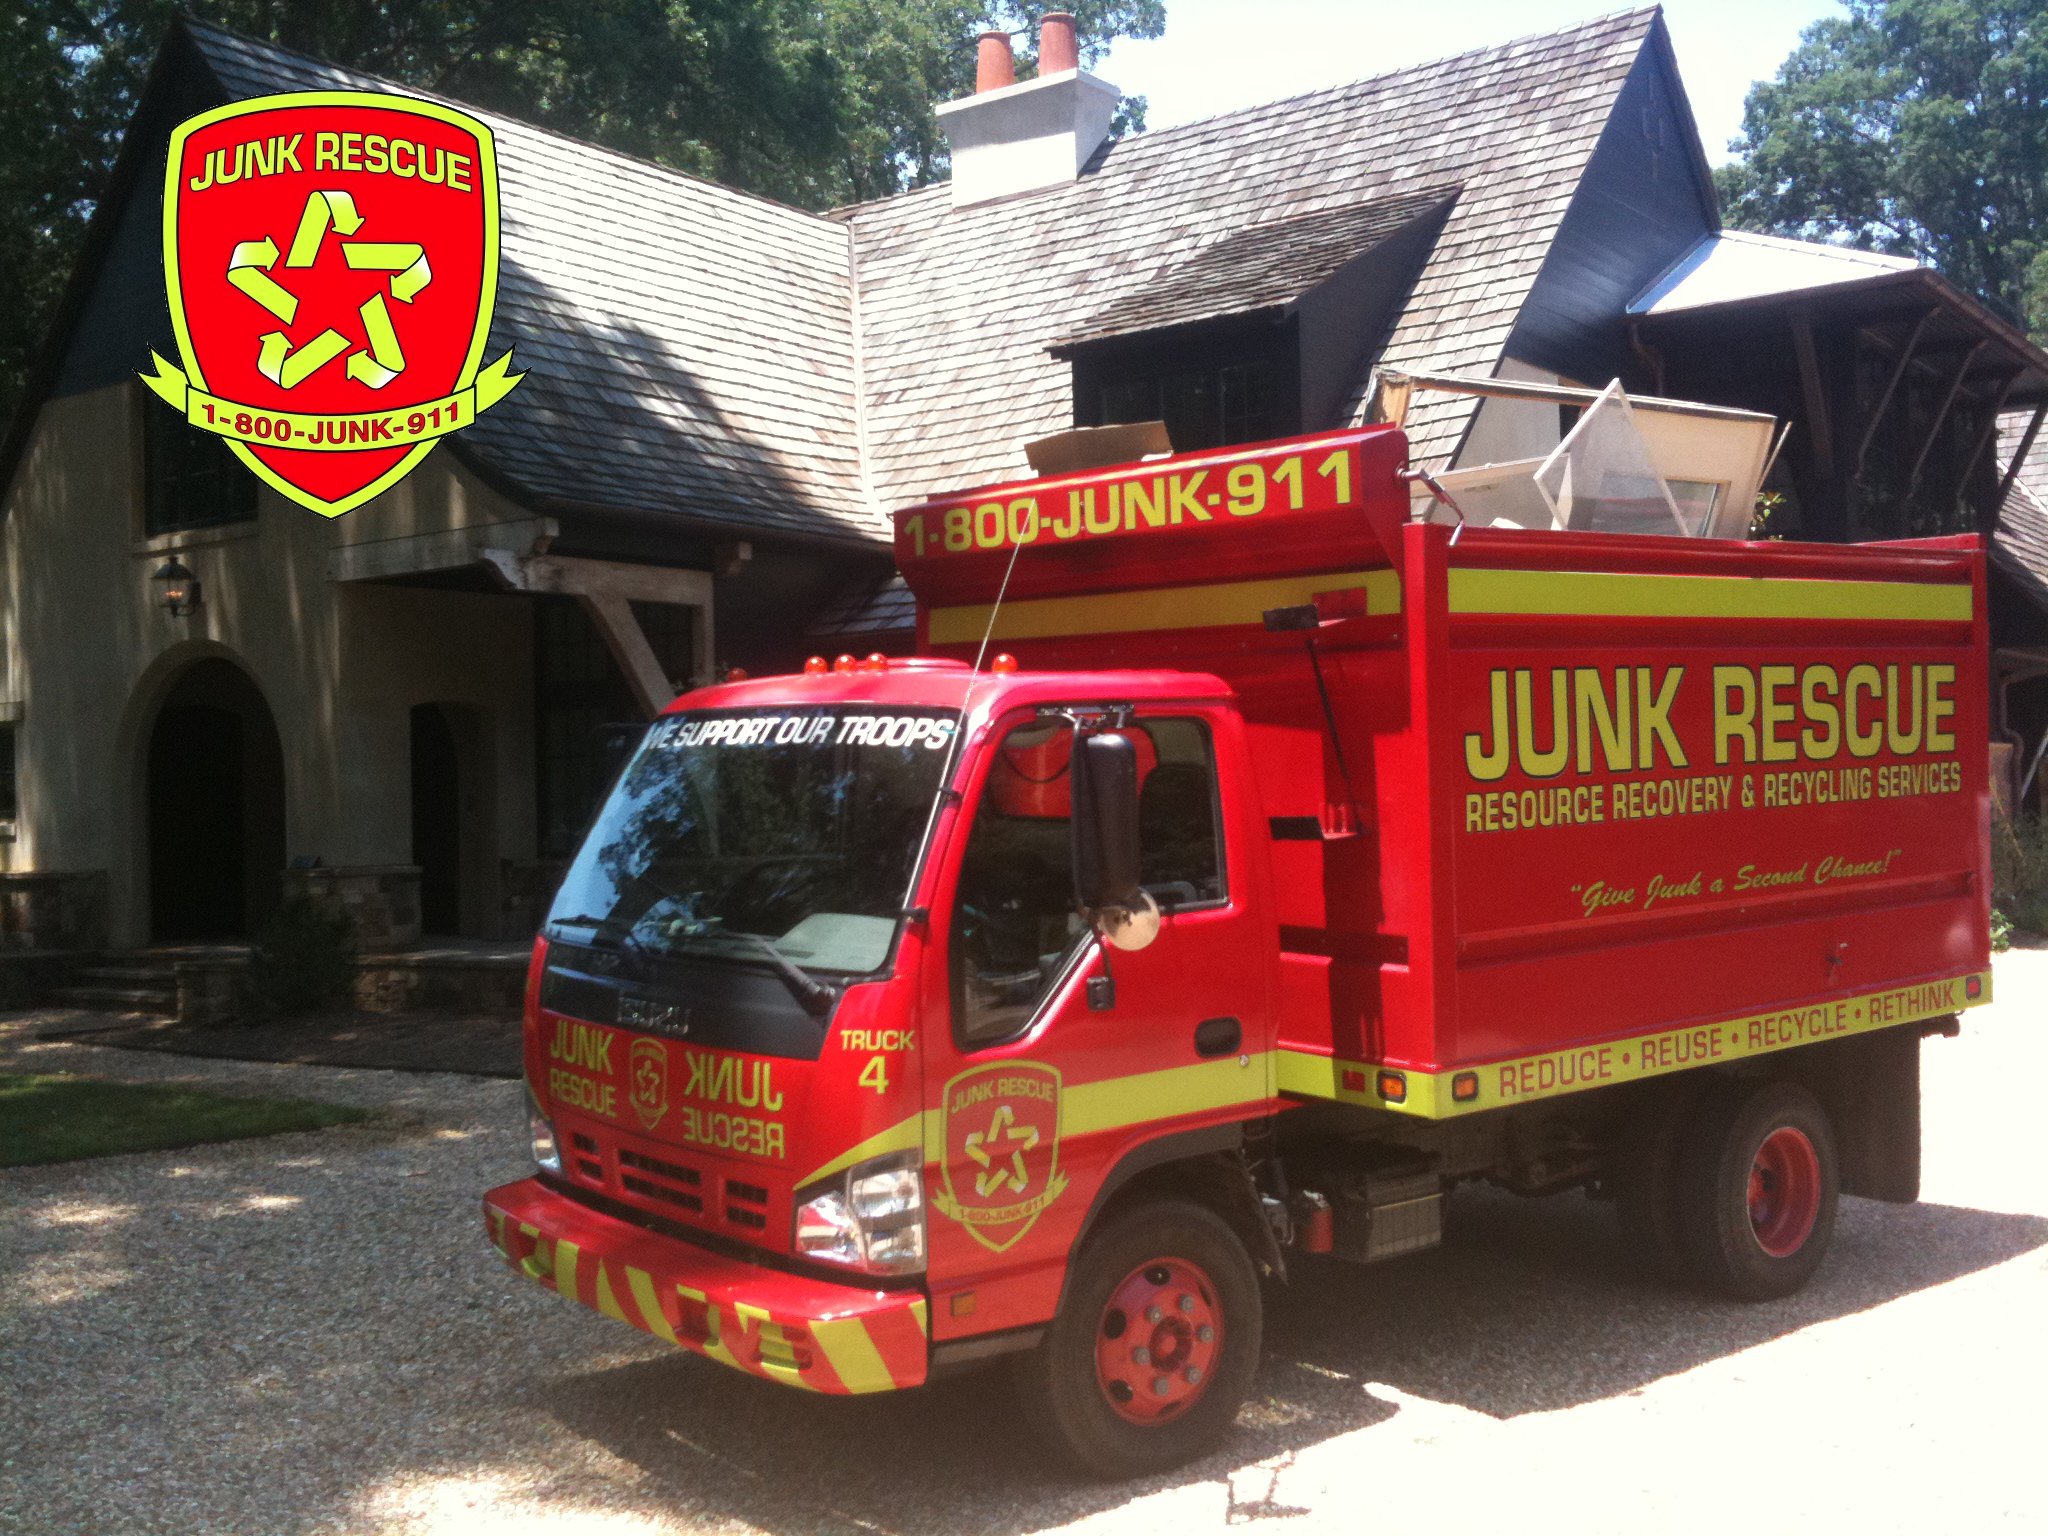 Professional Junk Removal Junk Rescue